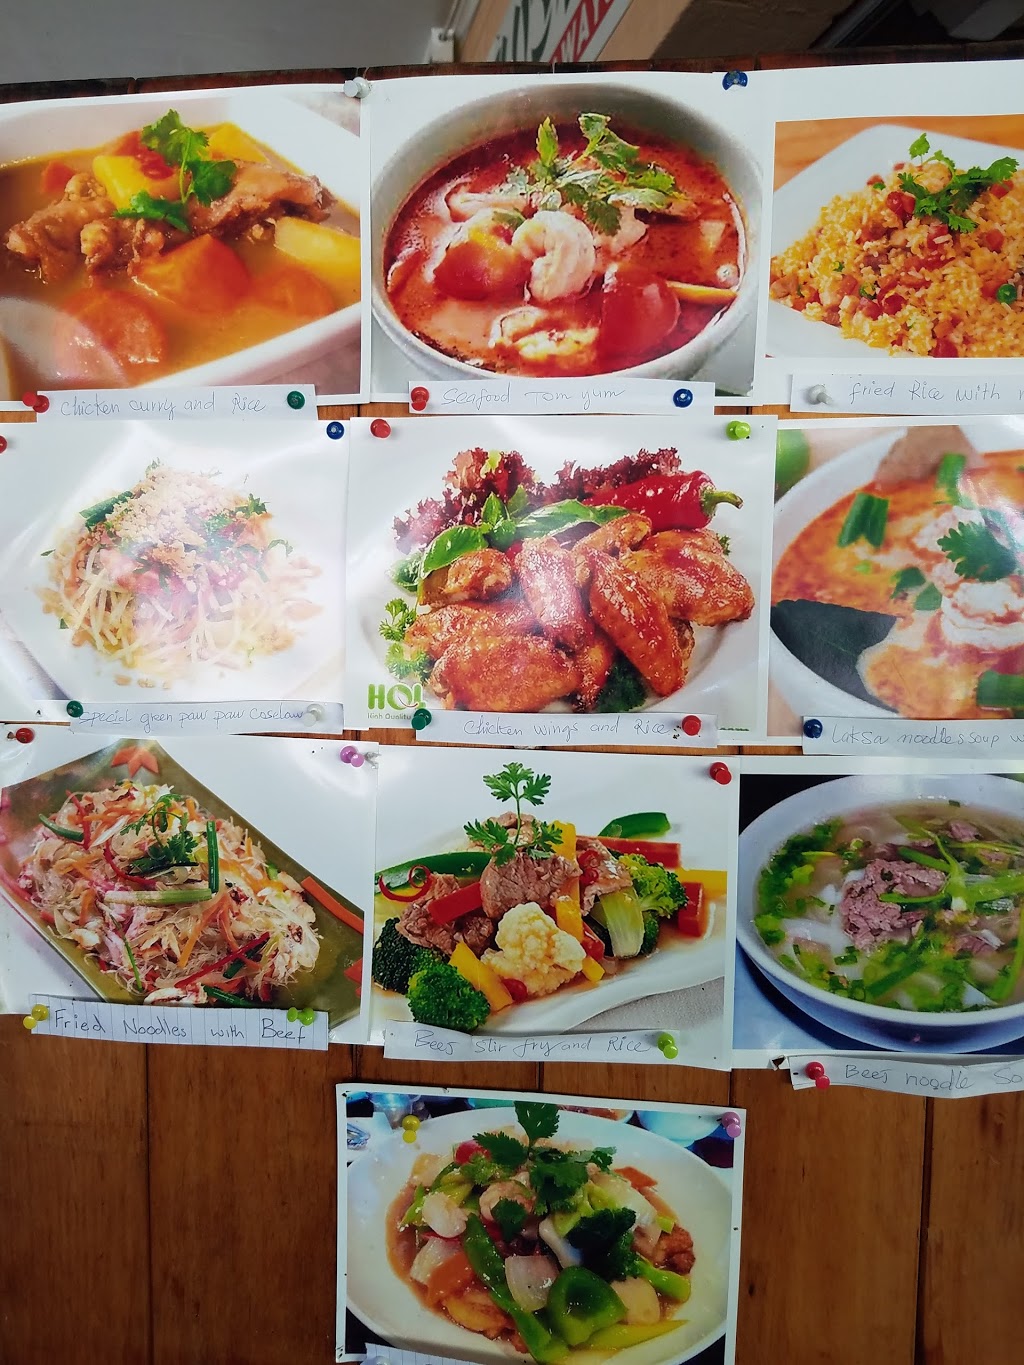 Lans Vietnamese Cuisine | restaurant | 2 Thooree St, Kuranda QLD 4881, Australia